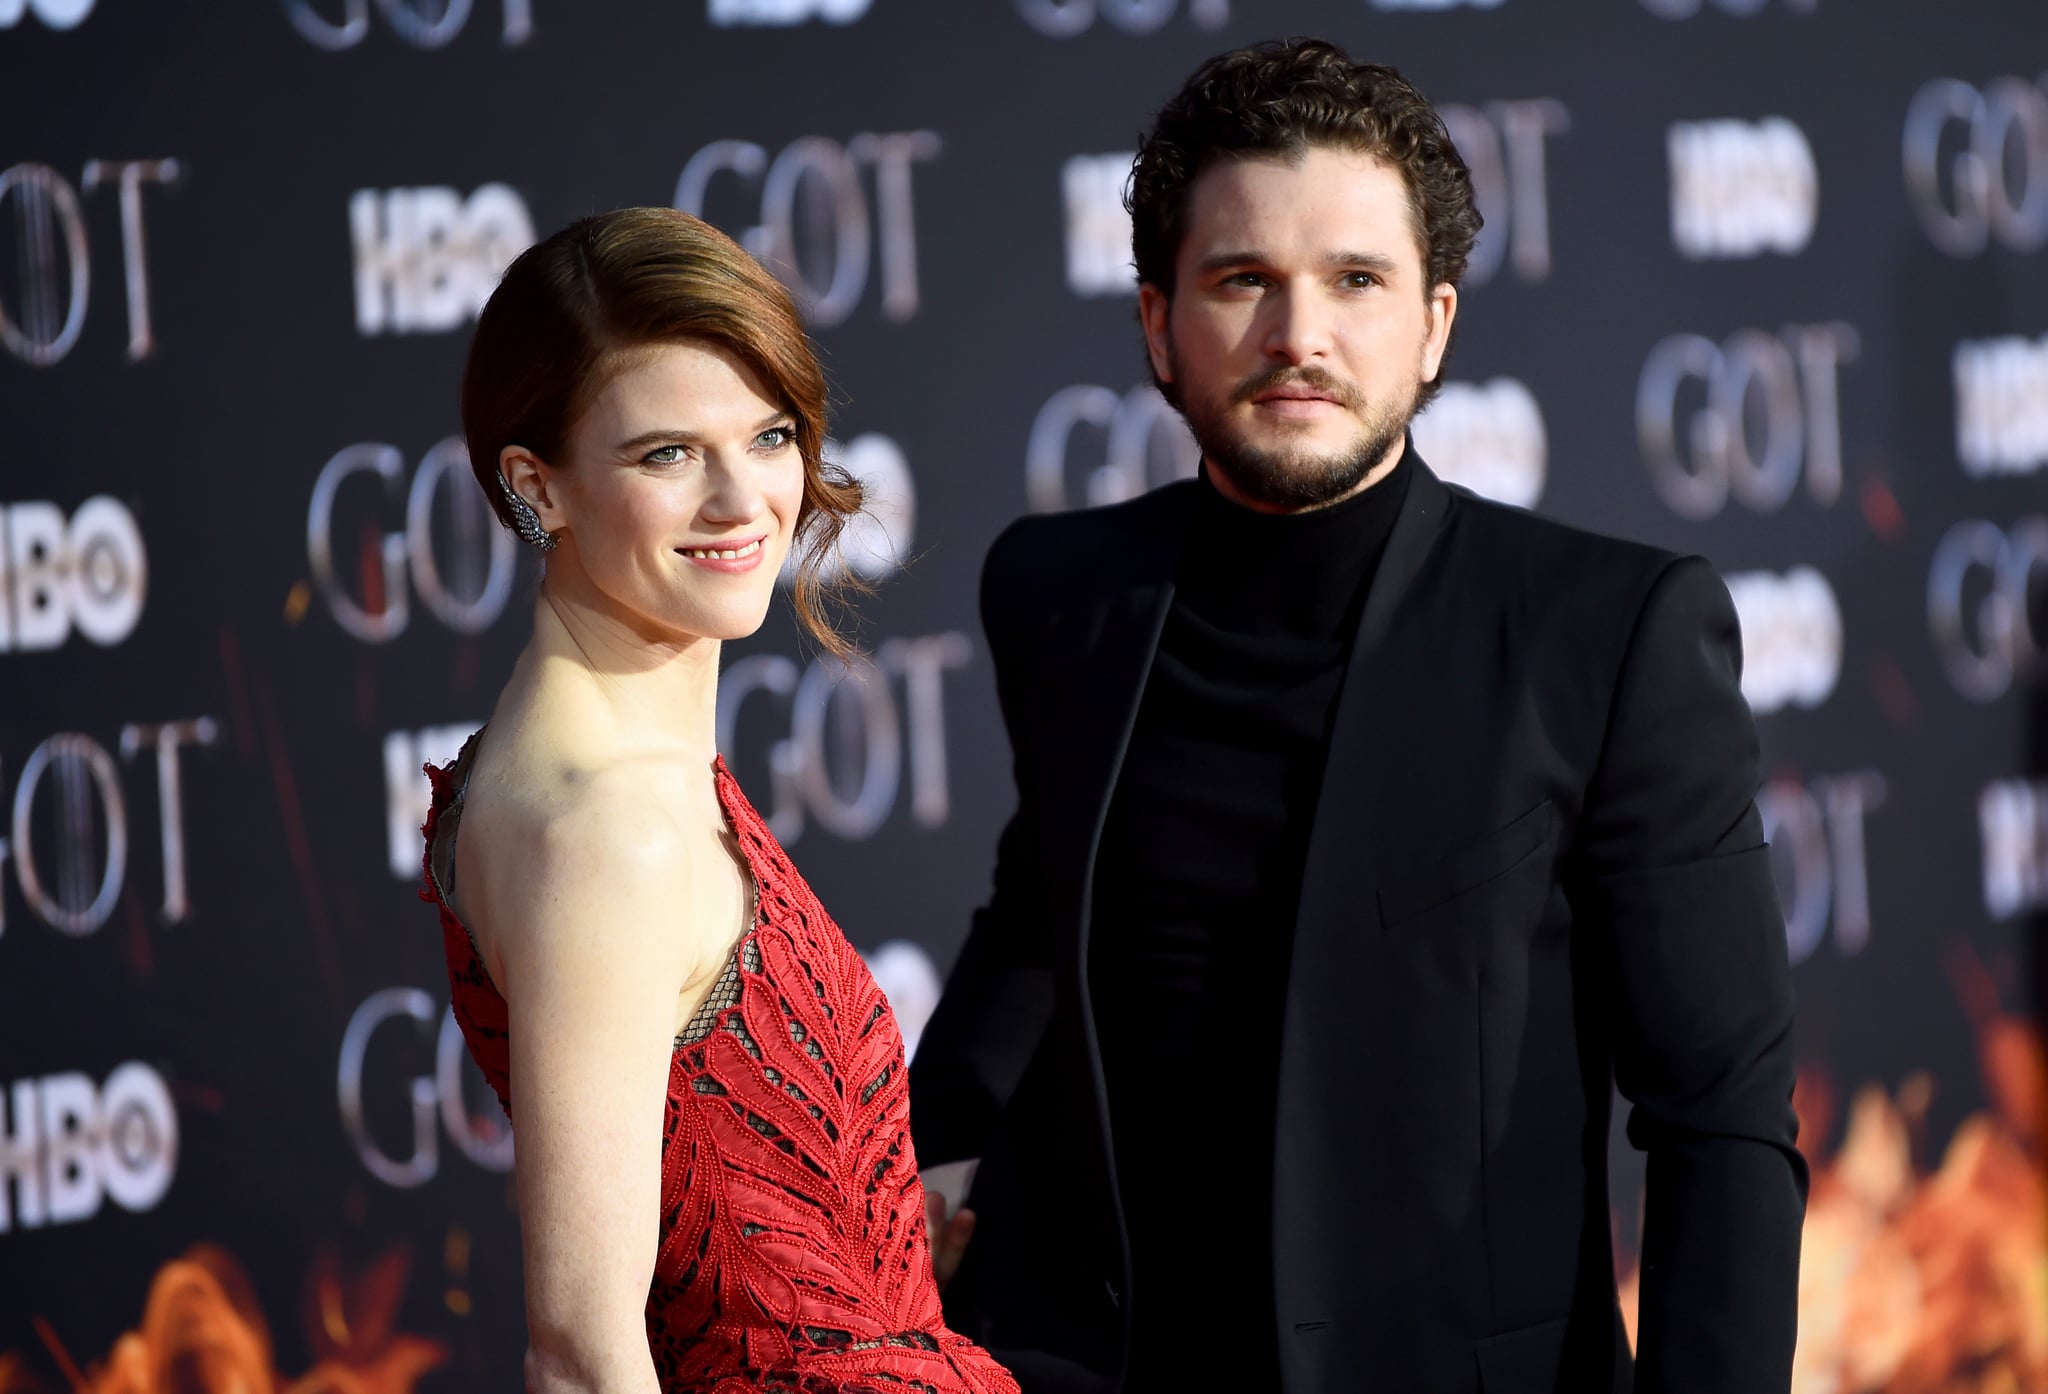 Game of Thrones': Season 8 Premiere Red Carpet Arrivals